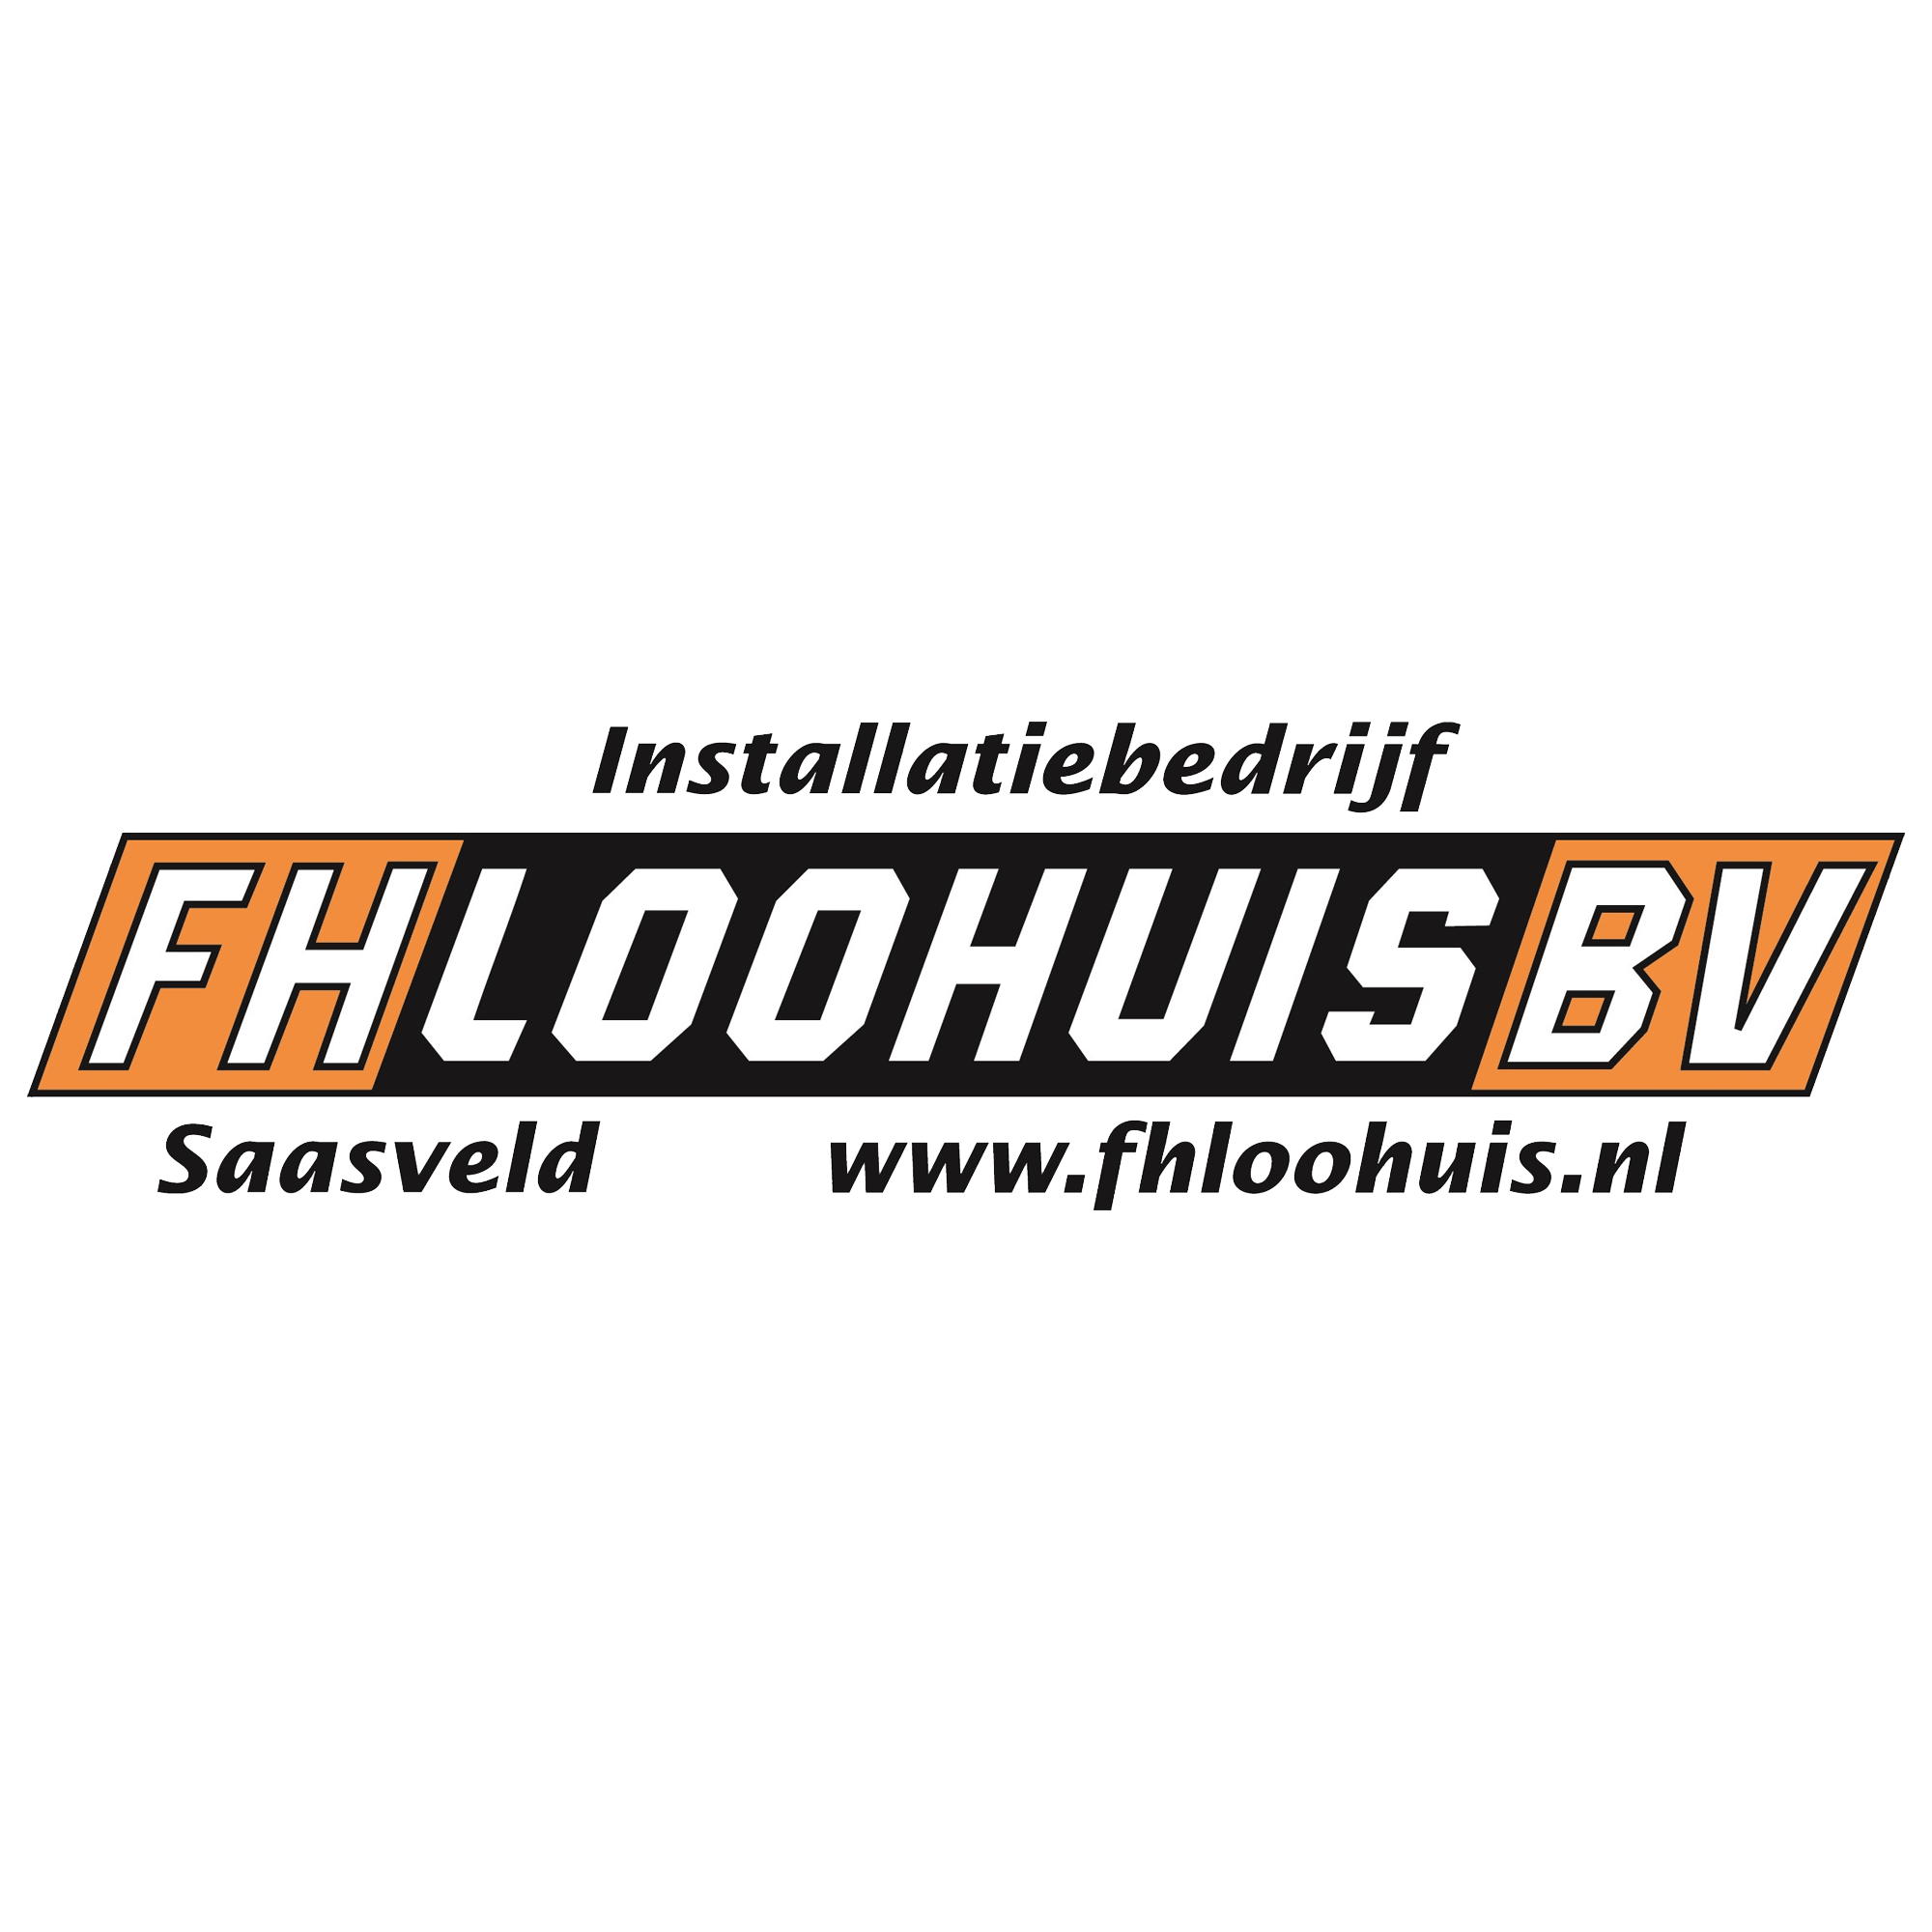 fh loohuis logo